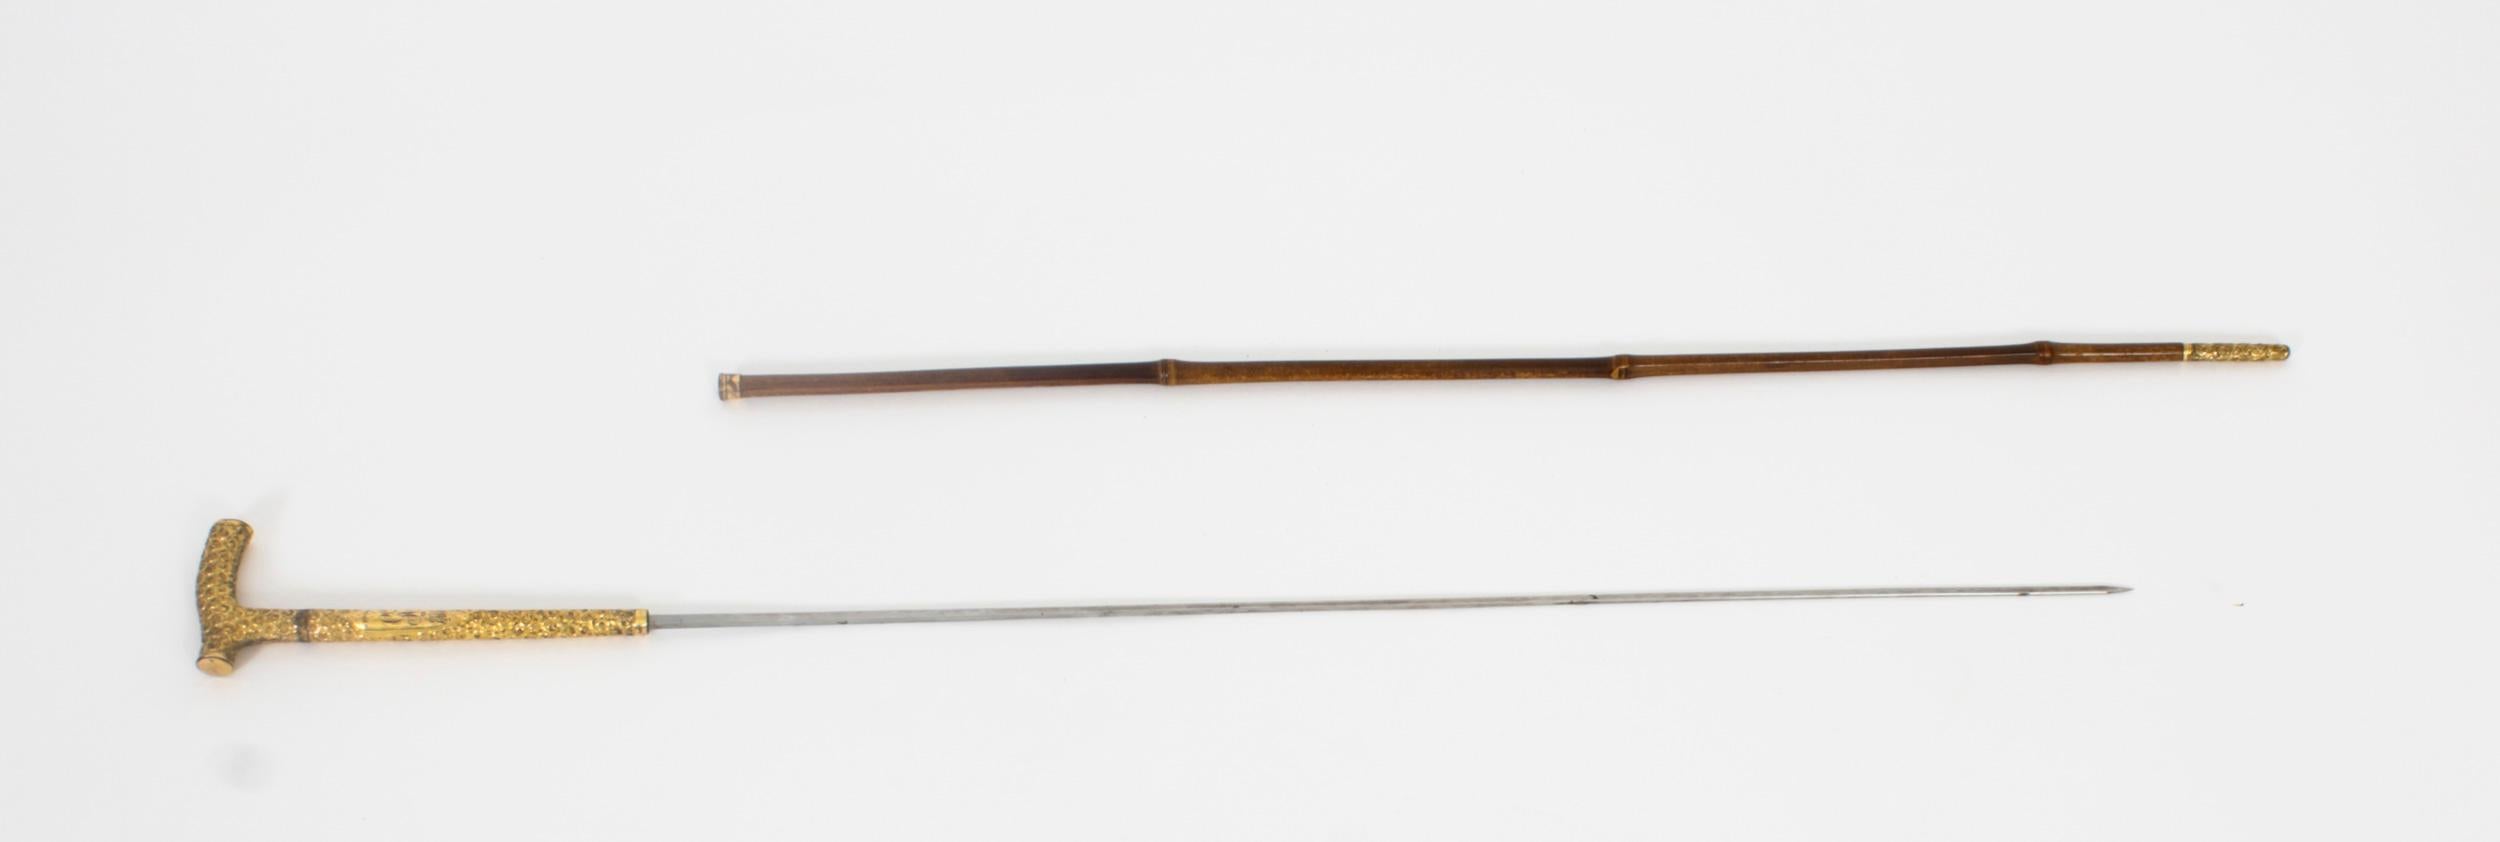 Antique Edwardian Bamboo Ormolu Sword / Walking Stick Cane London 1900 2